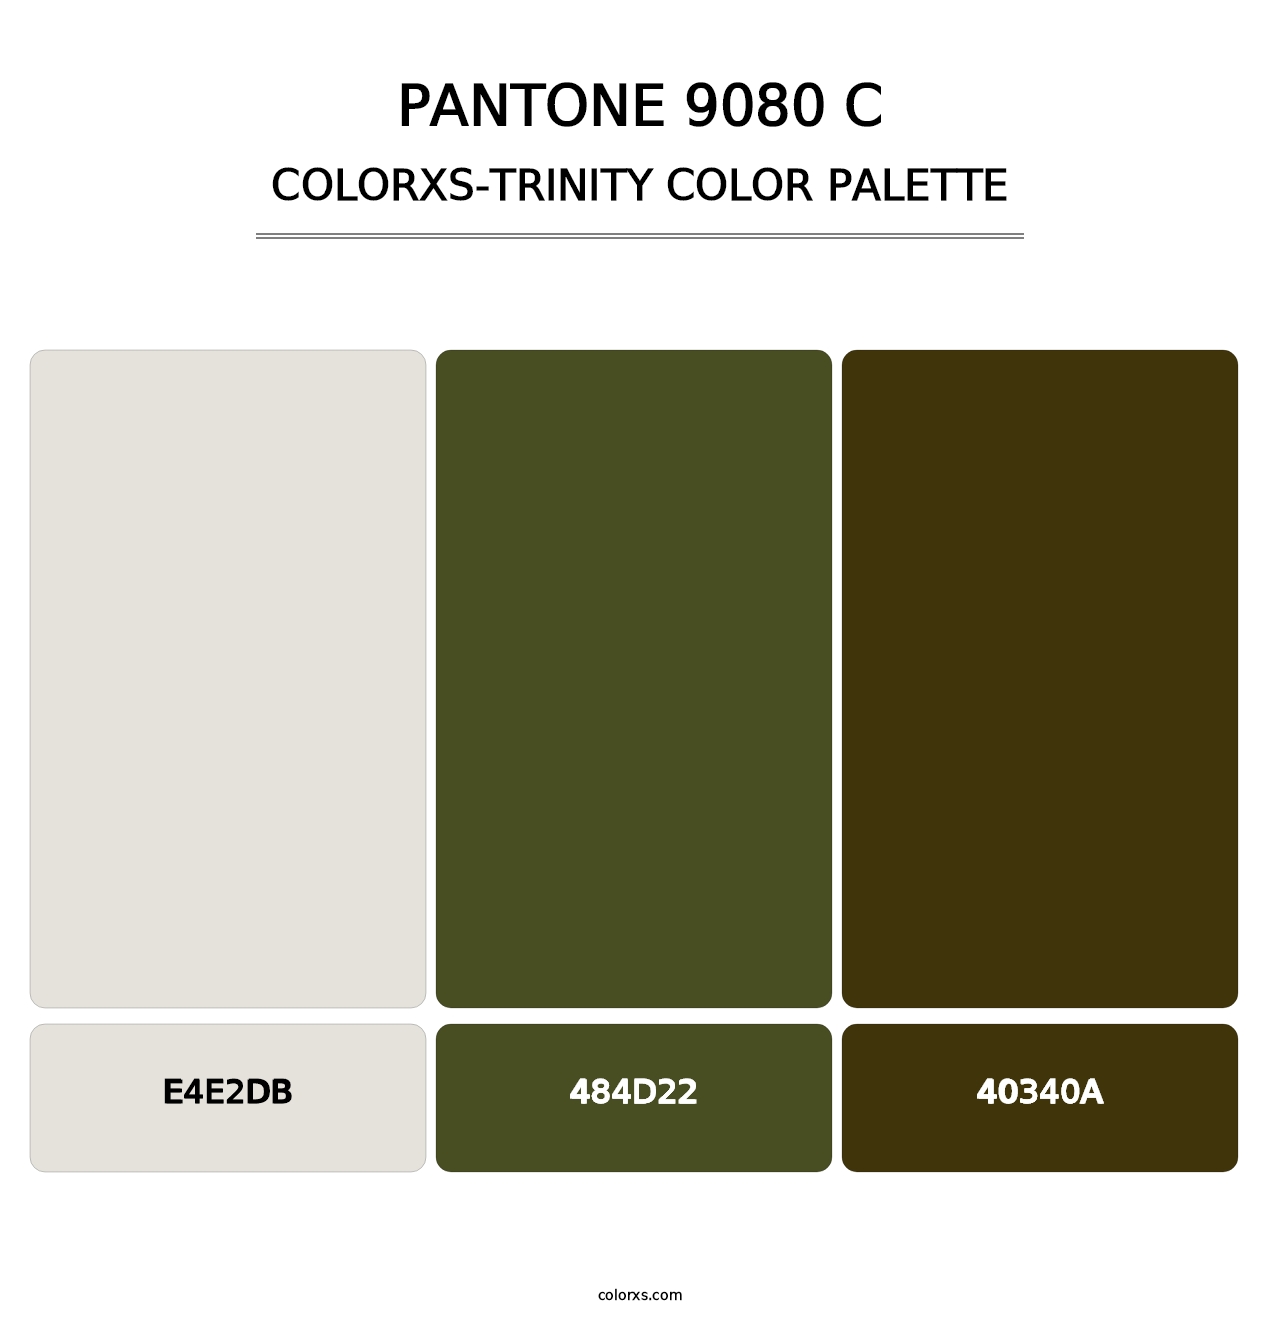 PANTONE 9080 C - Colorxs Trinity Palette